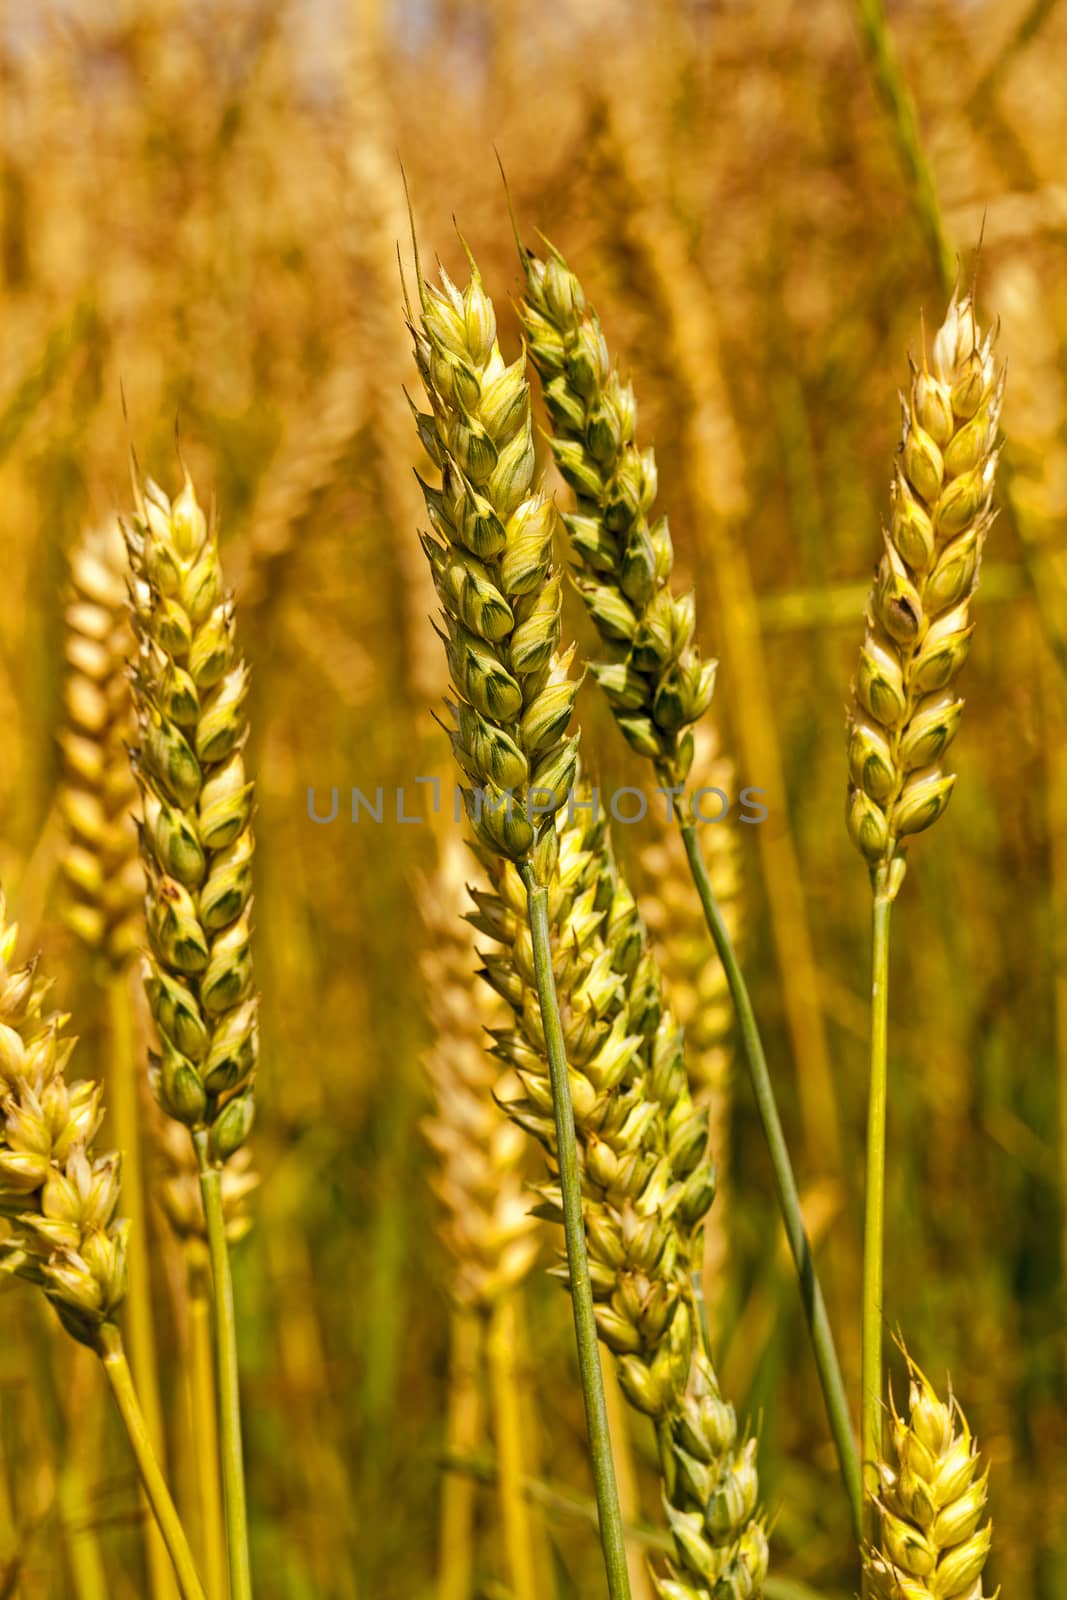   ripe ripened wheat in field. Filmed close up